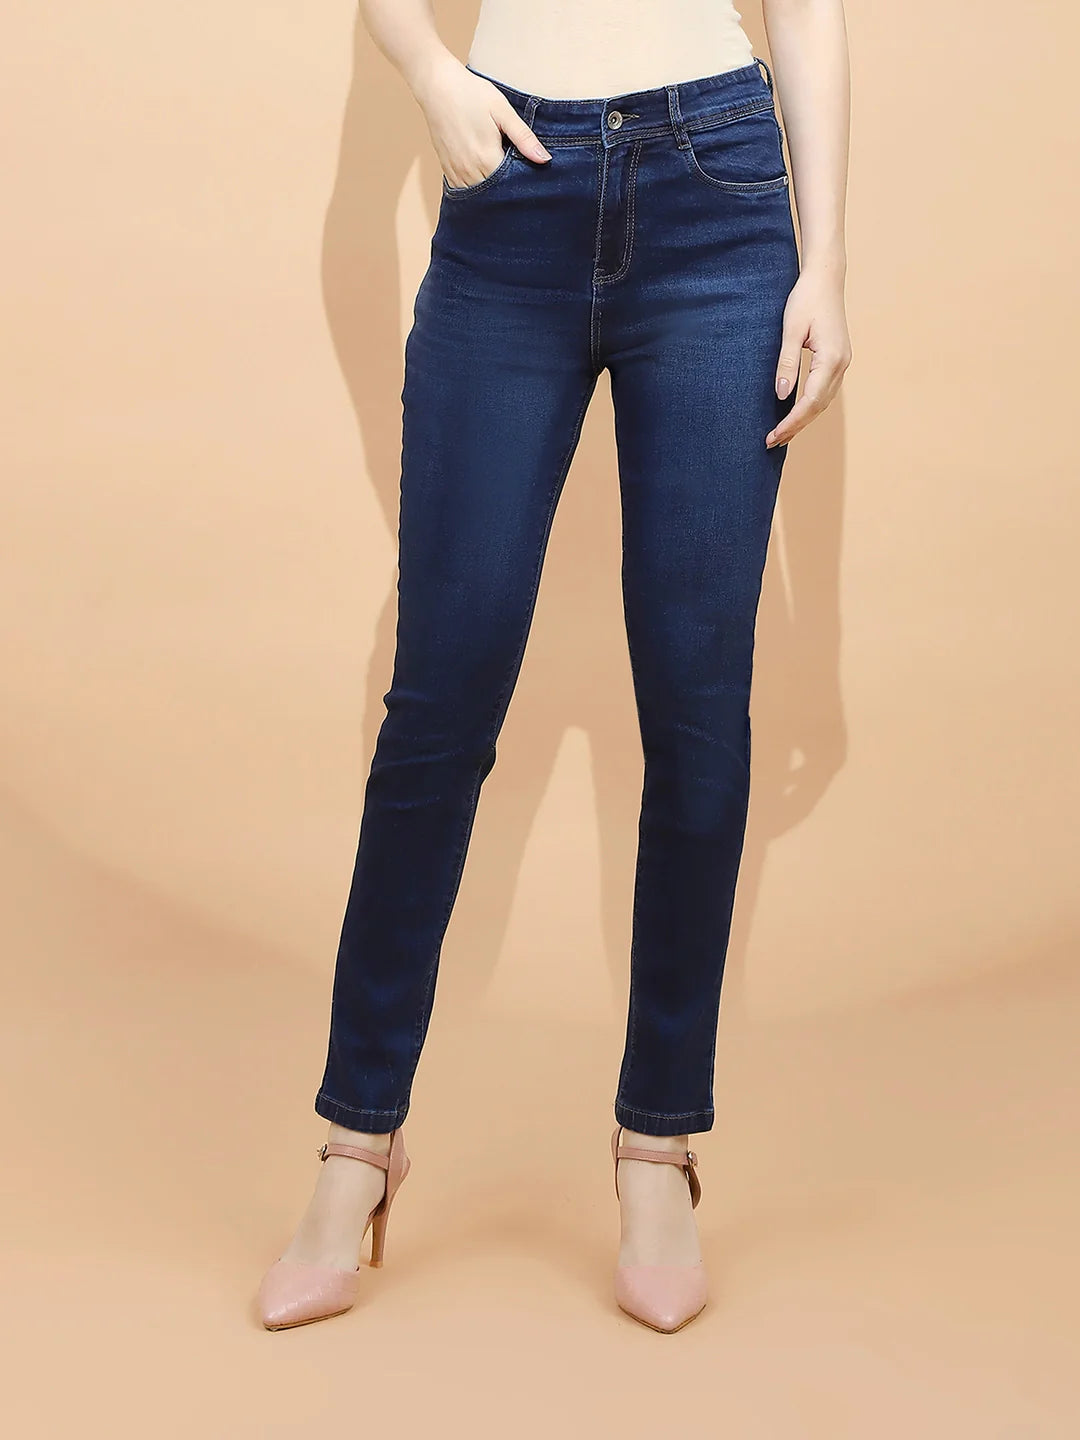 Dark Blue Cotton Blend Slim Fit Jeans For Women